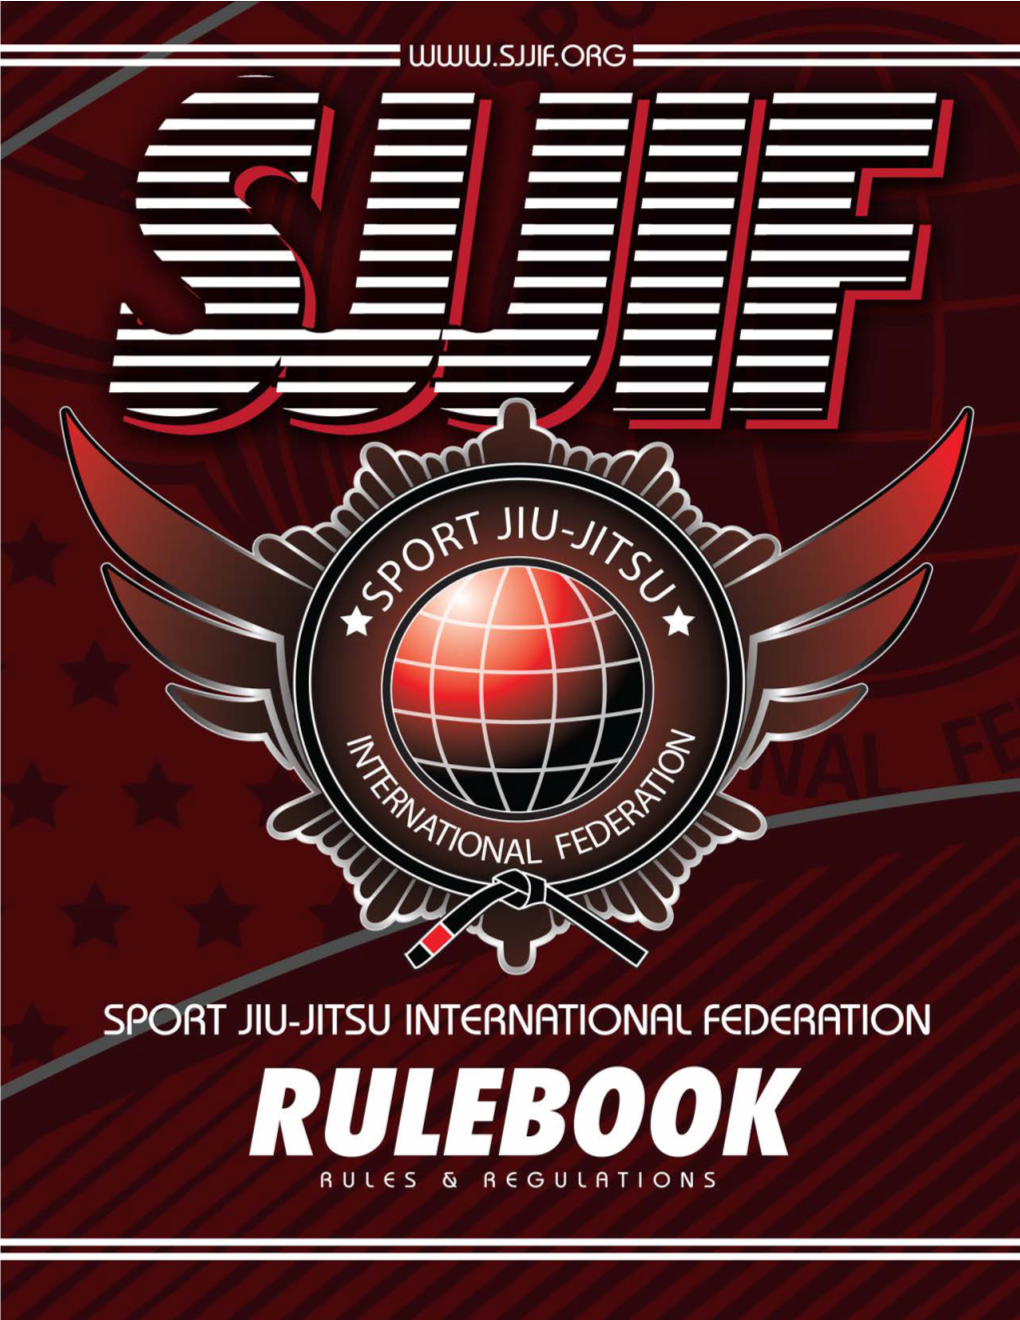 Sport Jiu-Jitsu International Federation Rules and Regulations Table of Contents